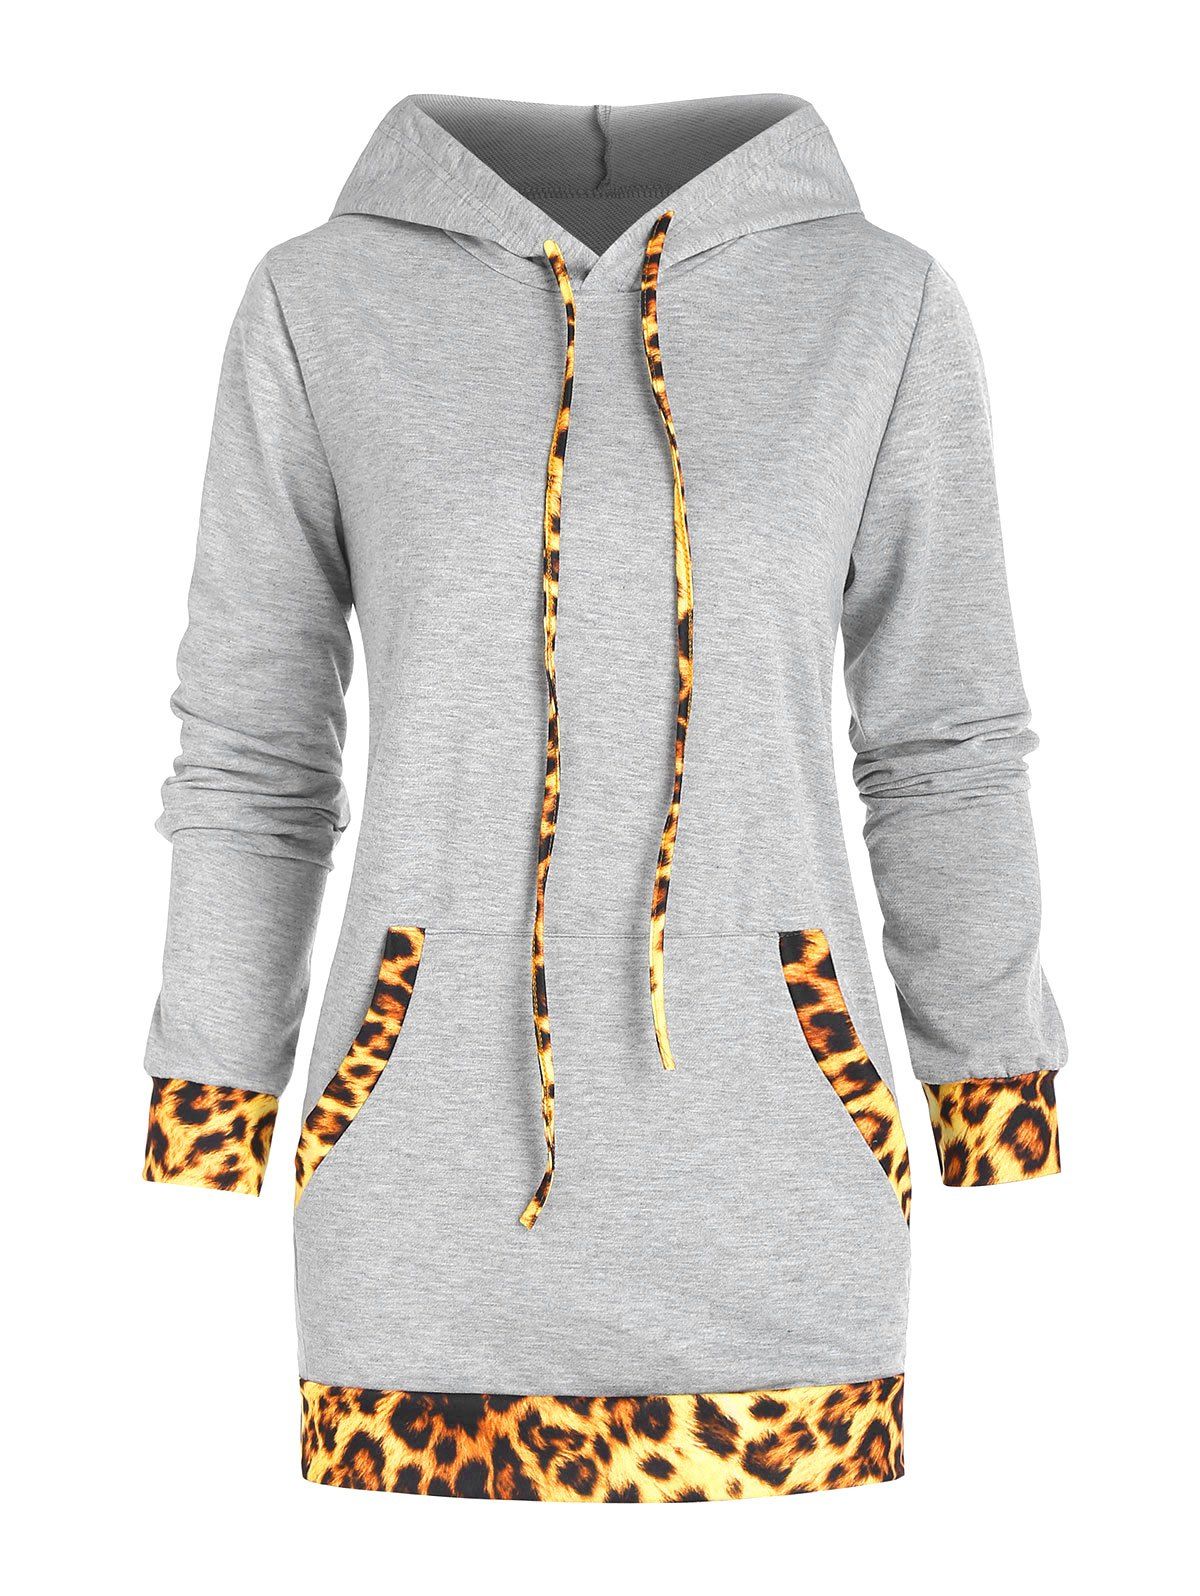 Leopard Kangaroo Pocket Hoodie Dress - LIGHT GRAY S